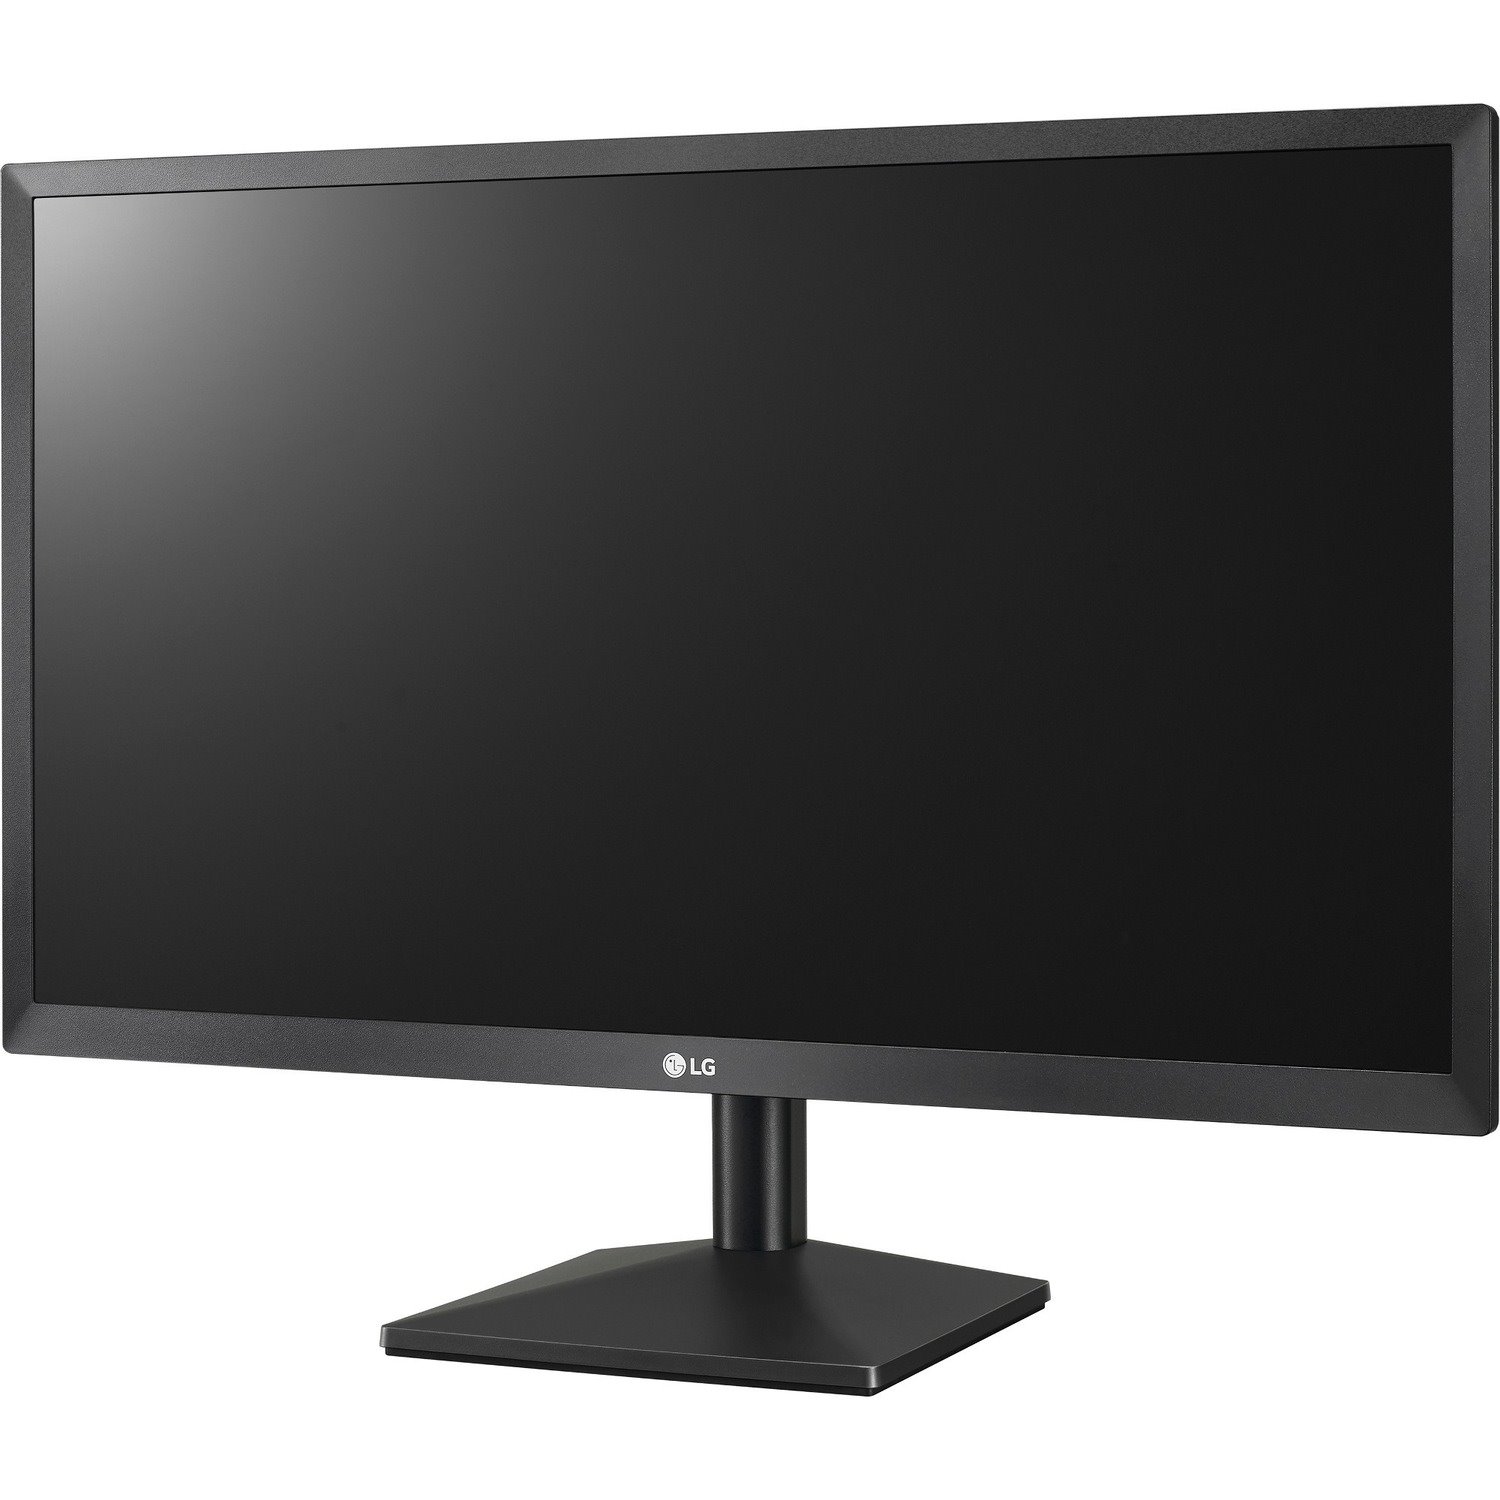 LG 27MK430H-B 27" Full HD WLED LCD Monitor - 16:9 - Matte Black